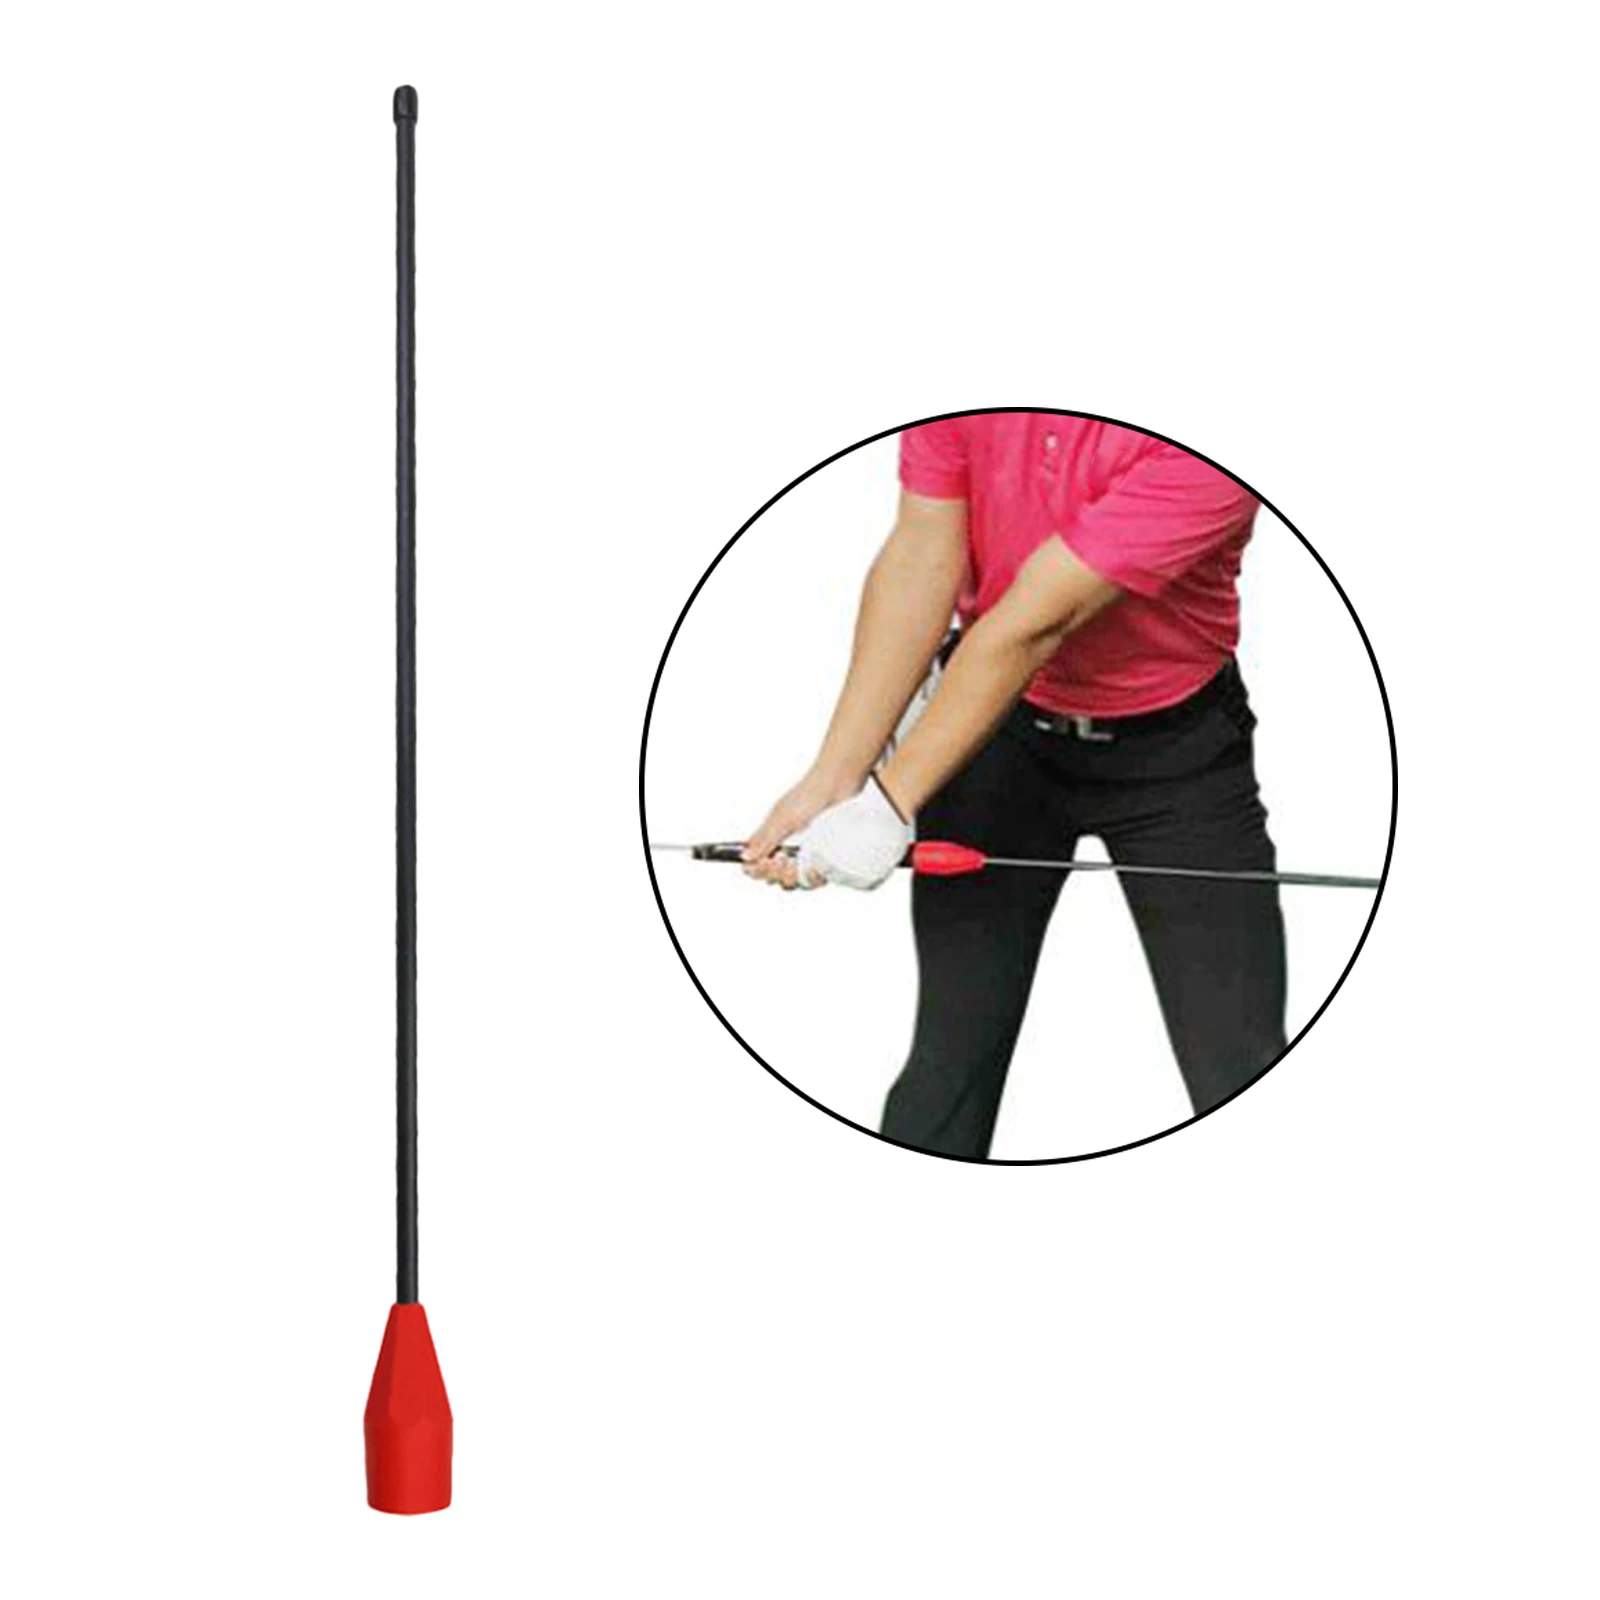 21inch Golf Swing Training Aid Teaches Proper Impact & Swing Plane Golf Swing Trainer Golf Chipping Practice Aid Stick